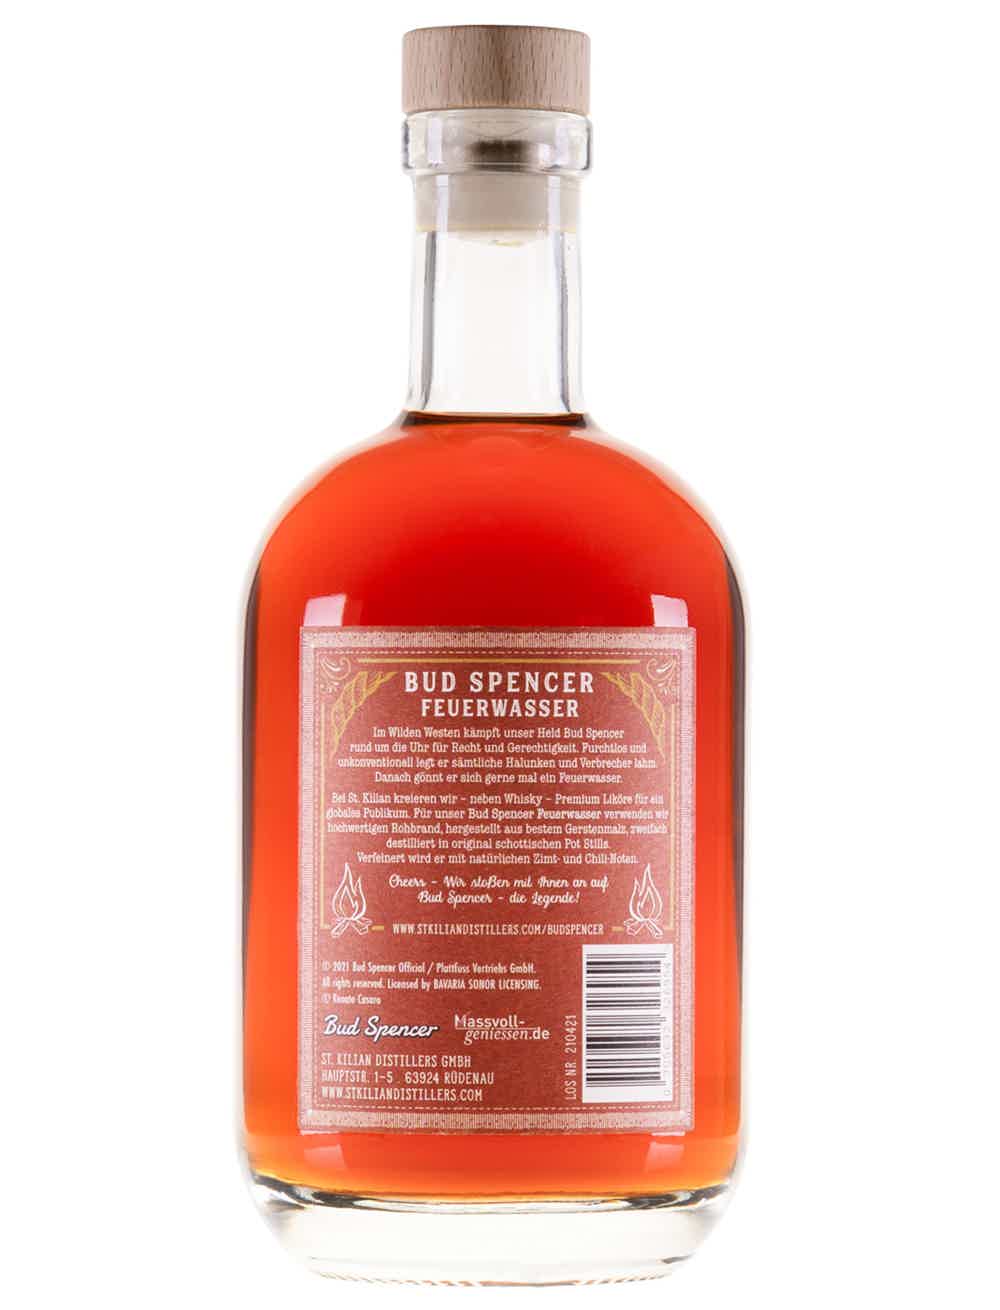 Bud Spencer - The Legend - Feuerwasser (cinnamon Liqueur with chili) 33.0% 0.7L, Spirits